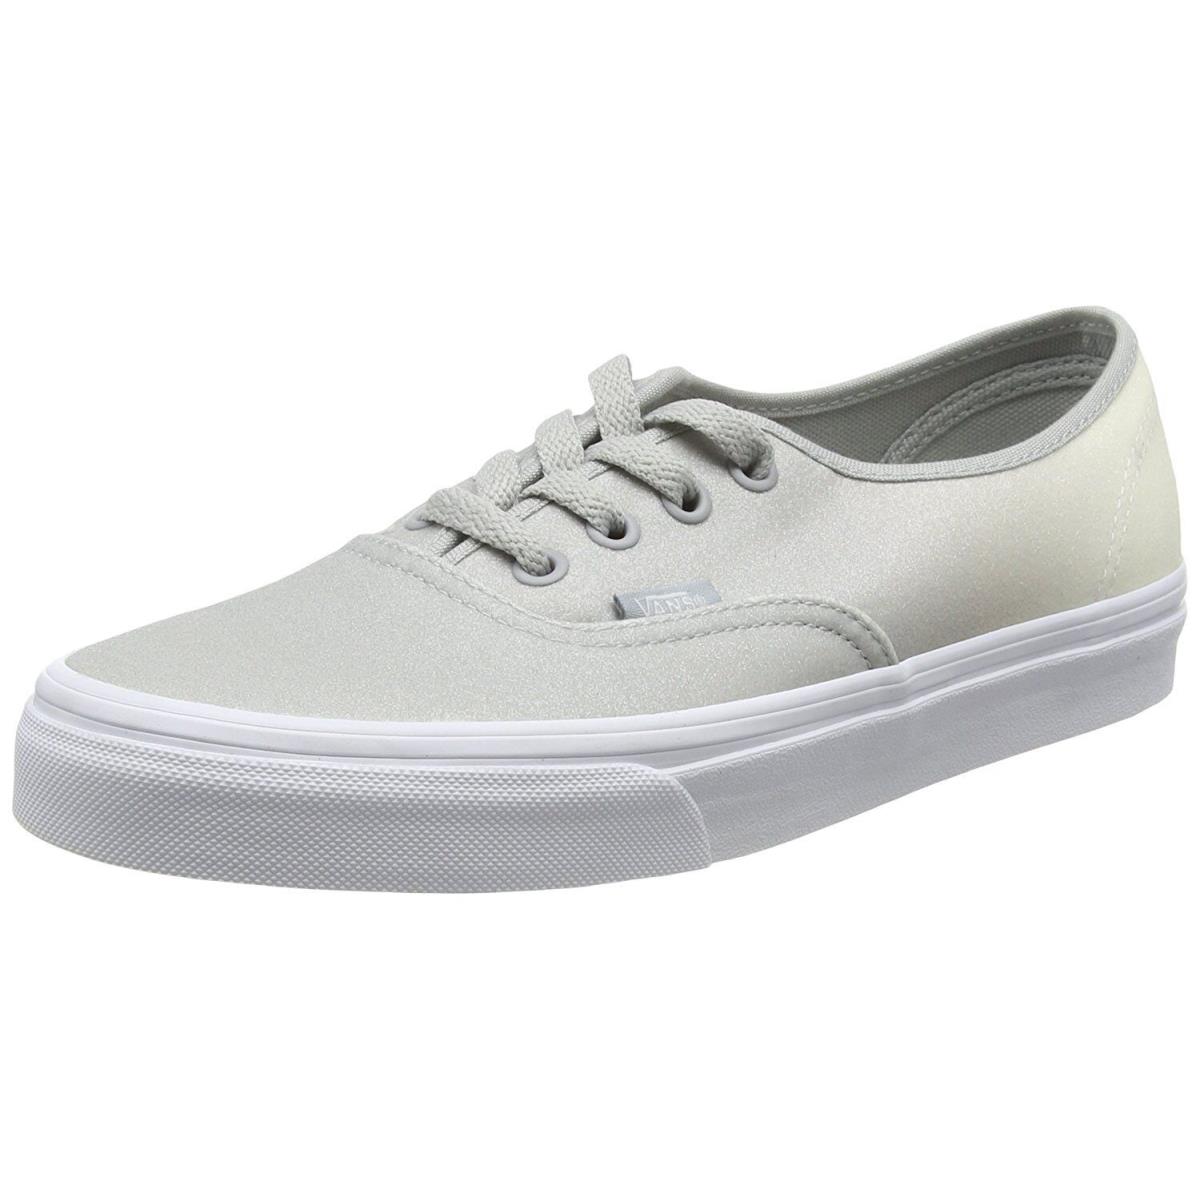 Vans Unisex 2 Tone Glitter White Skate Shoes Mens 8.5 Womens 10 - White